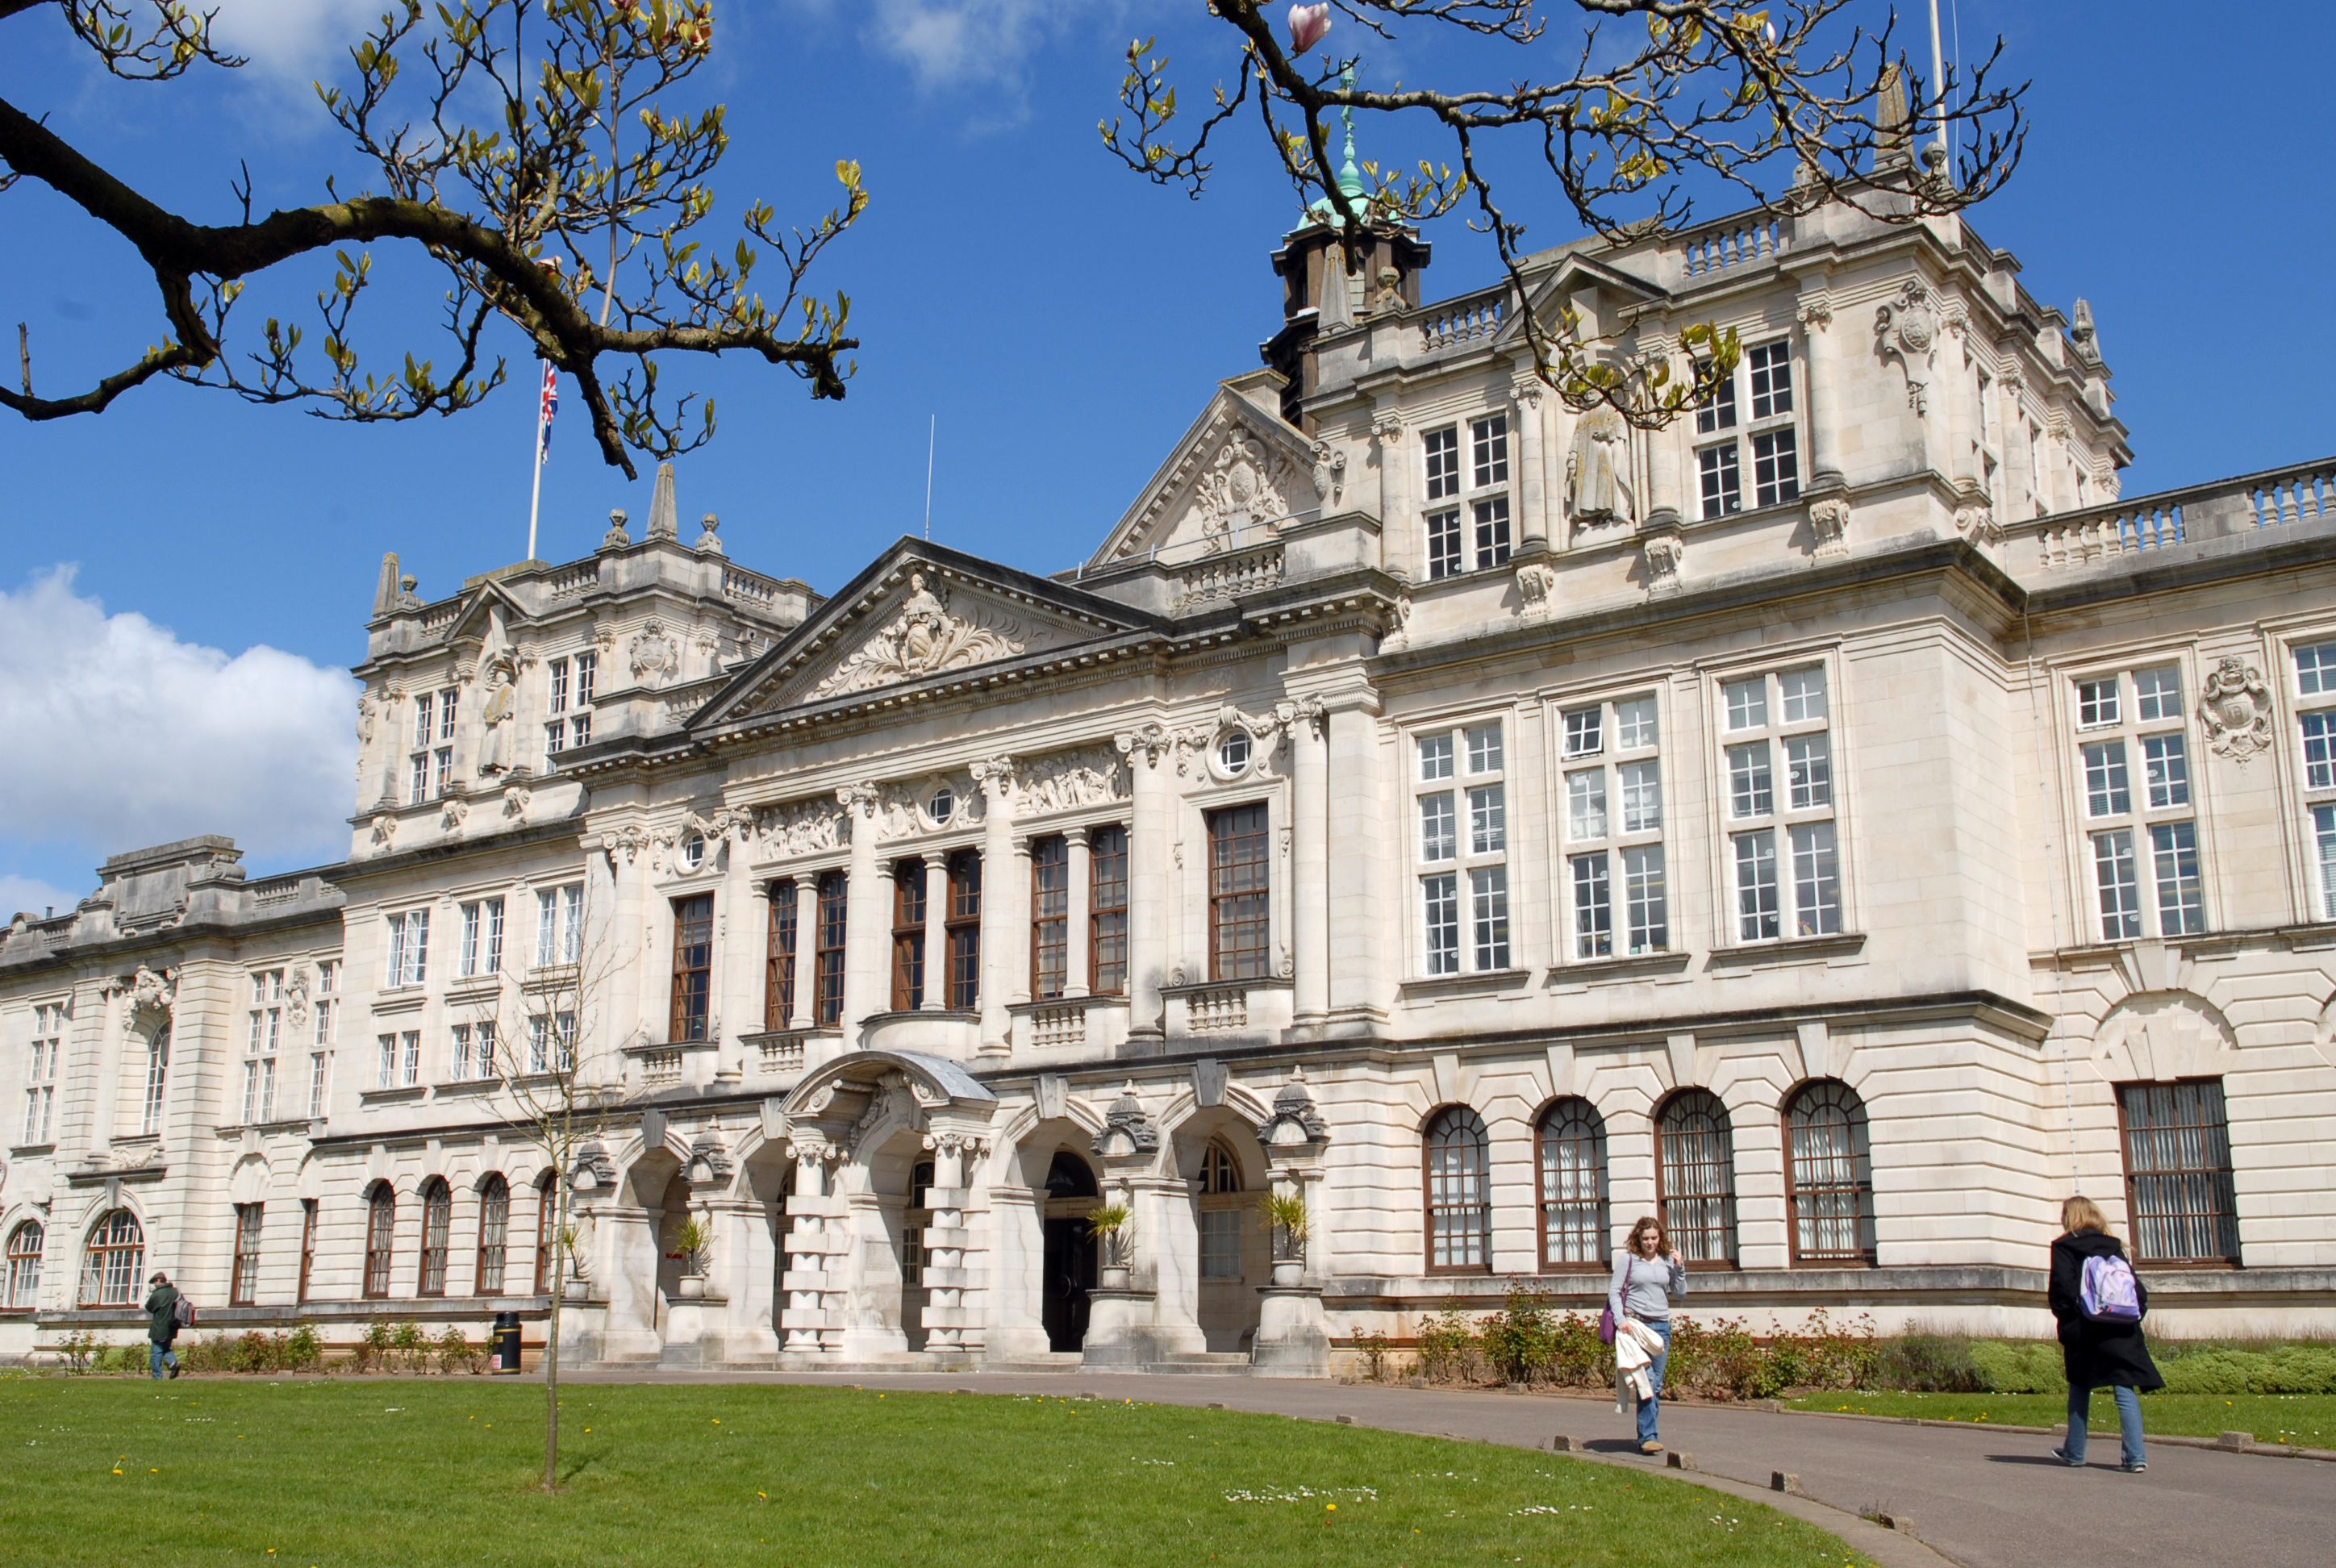 Most beautiful universities in the UK